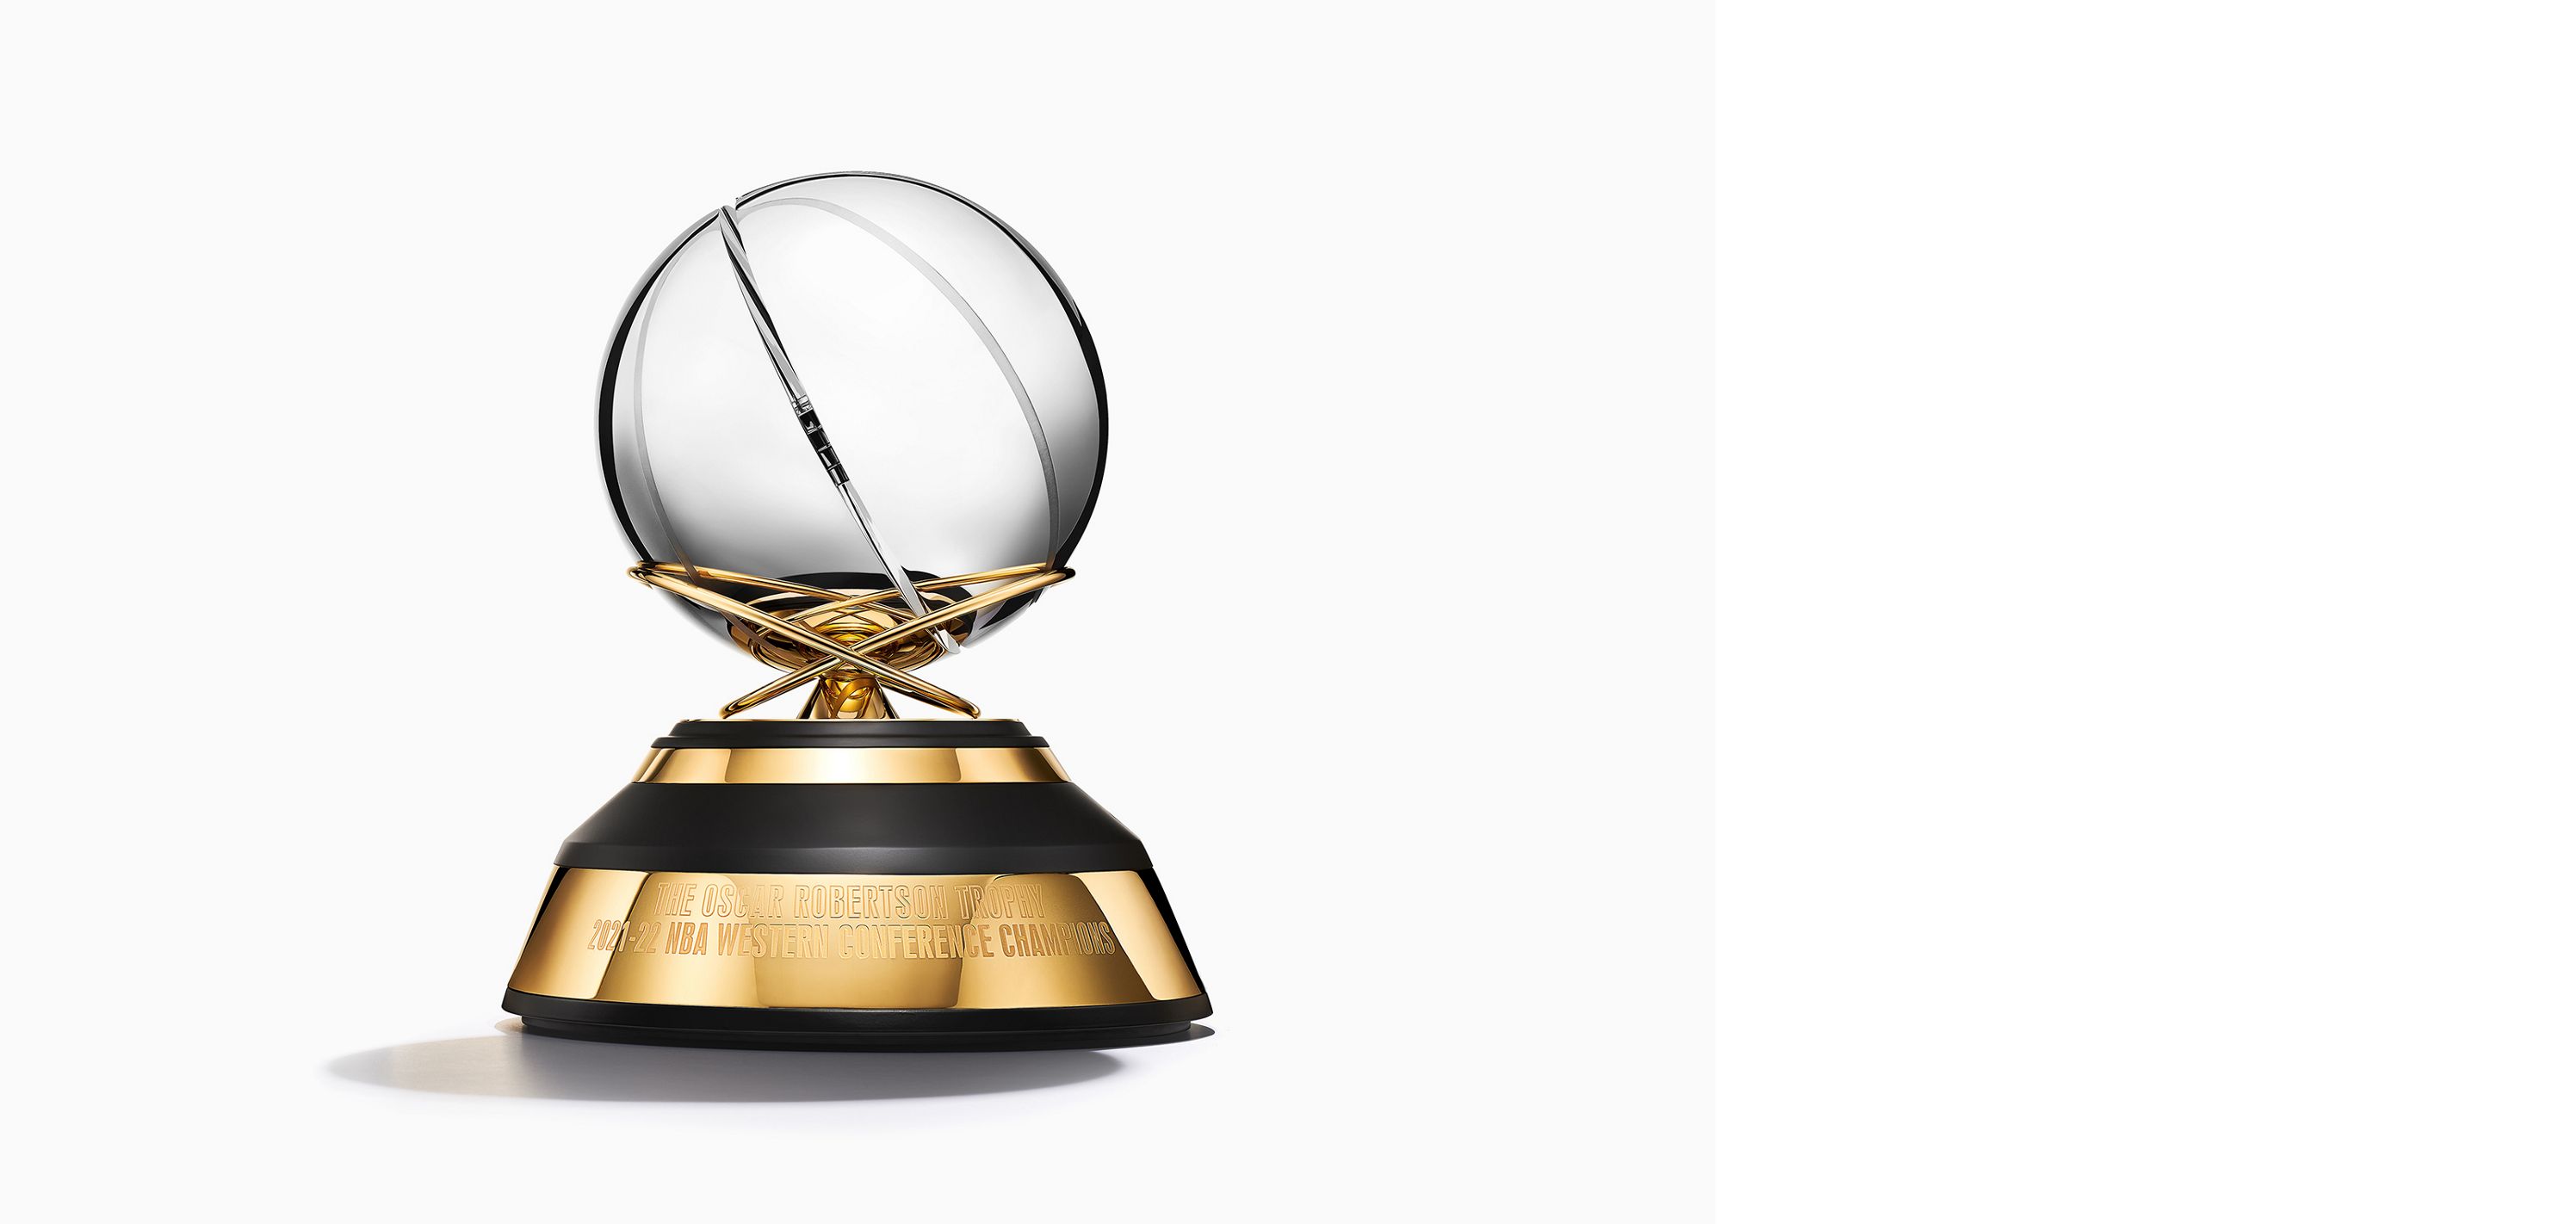 basketball championship trophy 2022